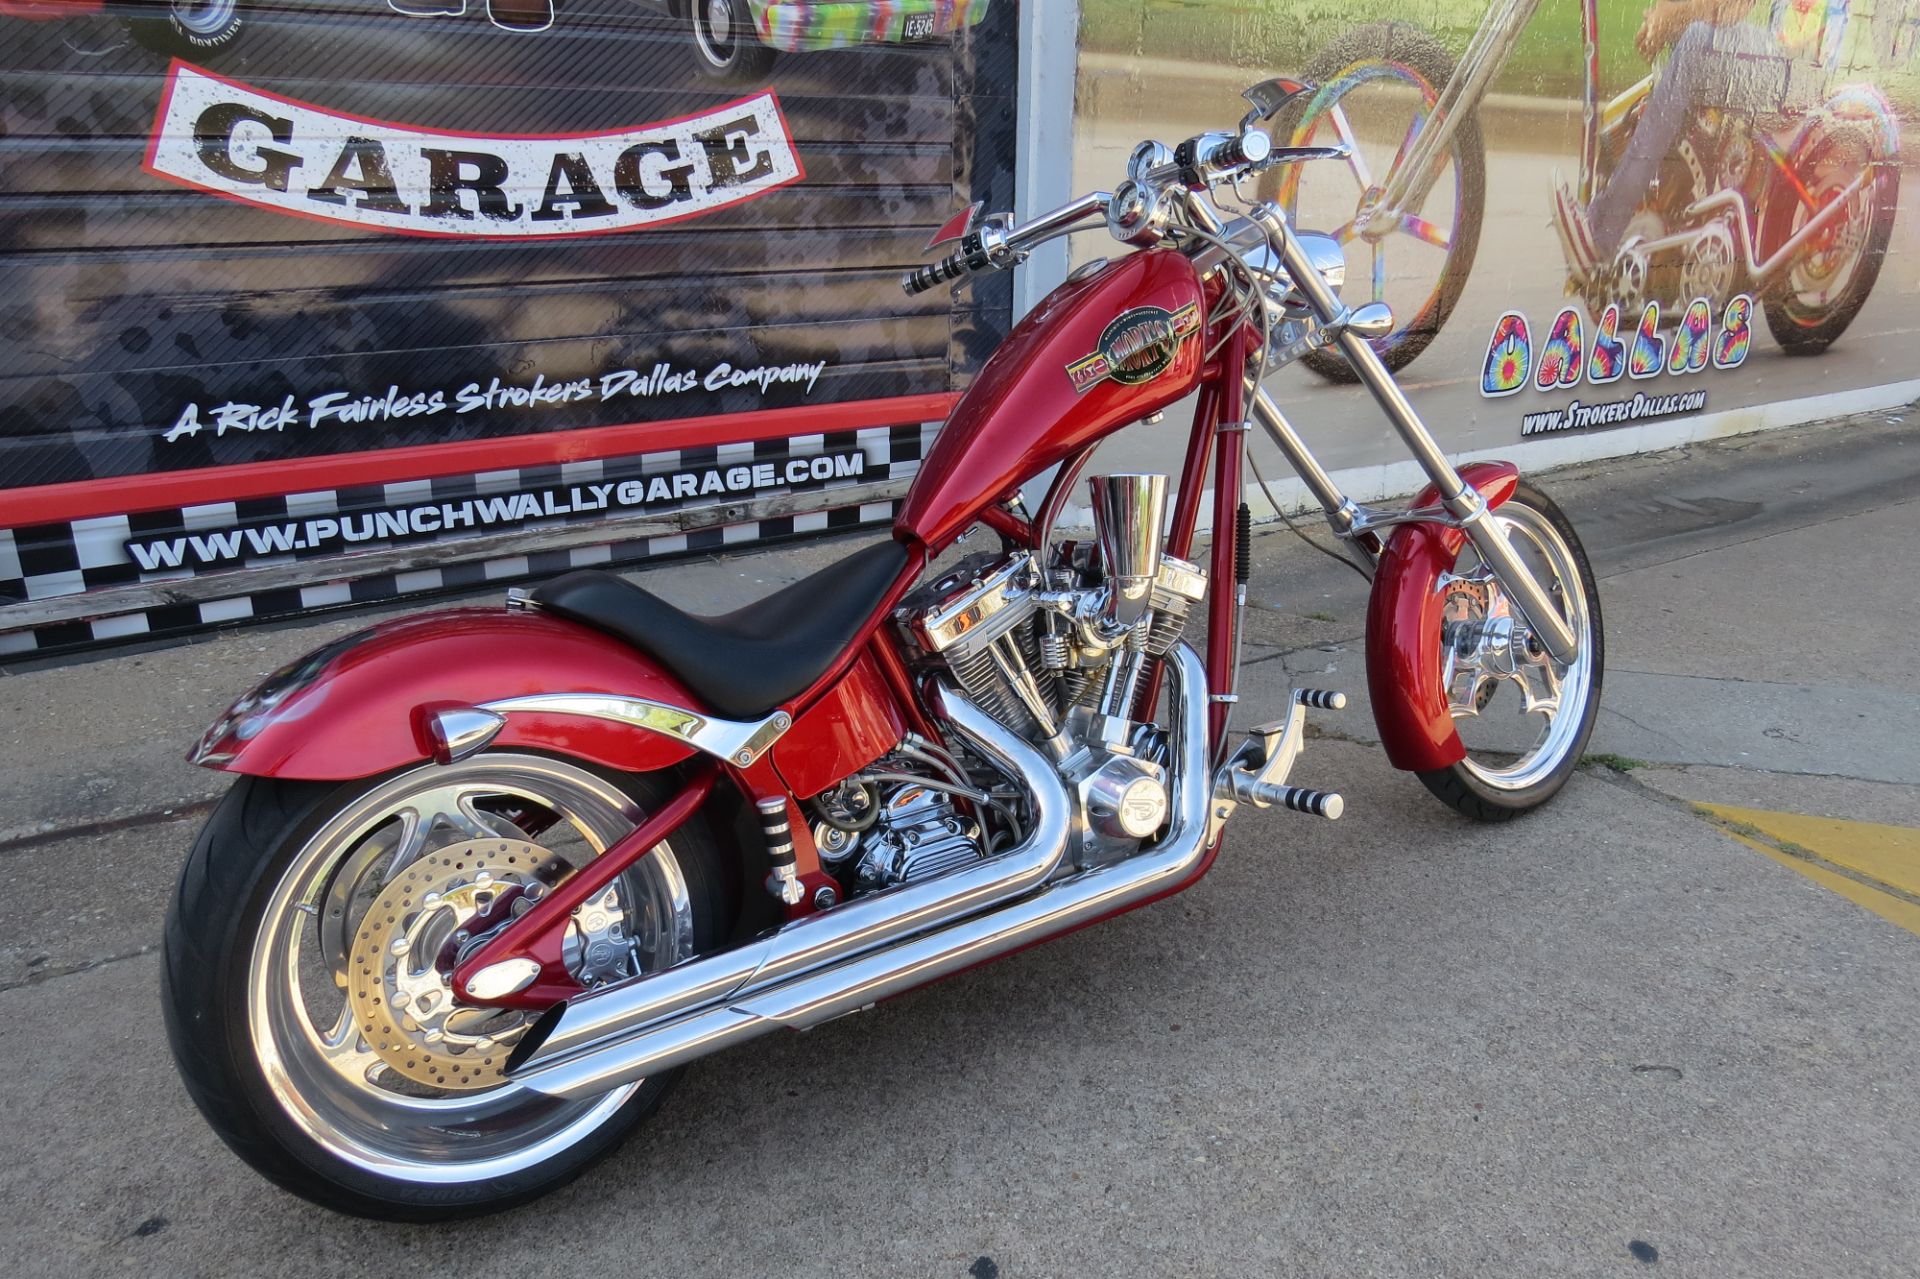 2003 Big Dog Motorcycles CHOPPER in Dallas, Texas - Photo 3